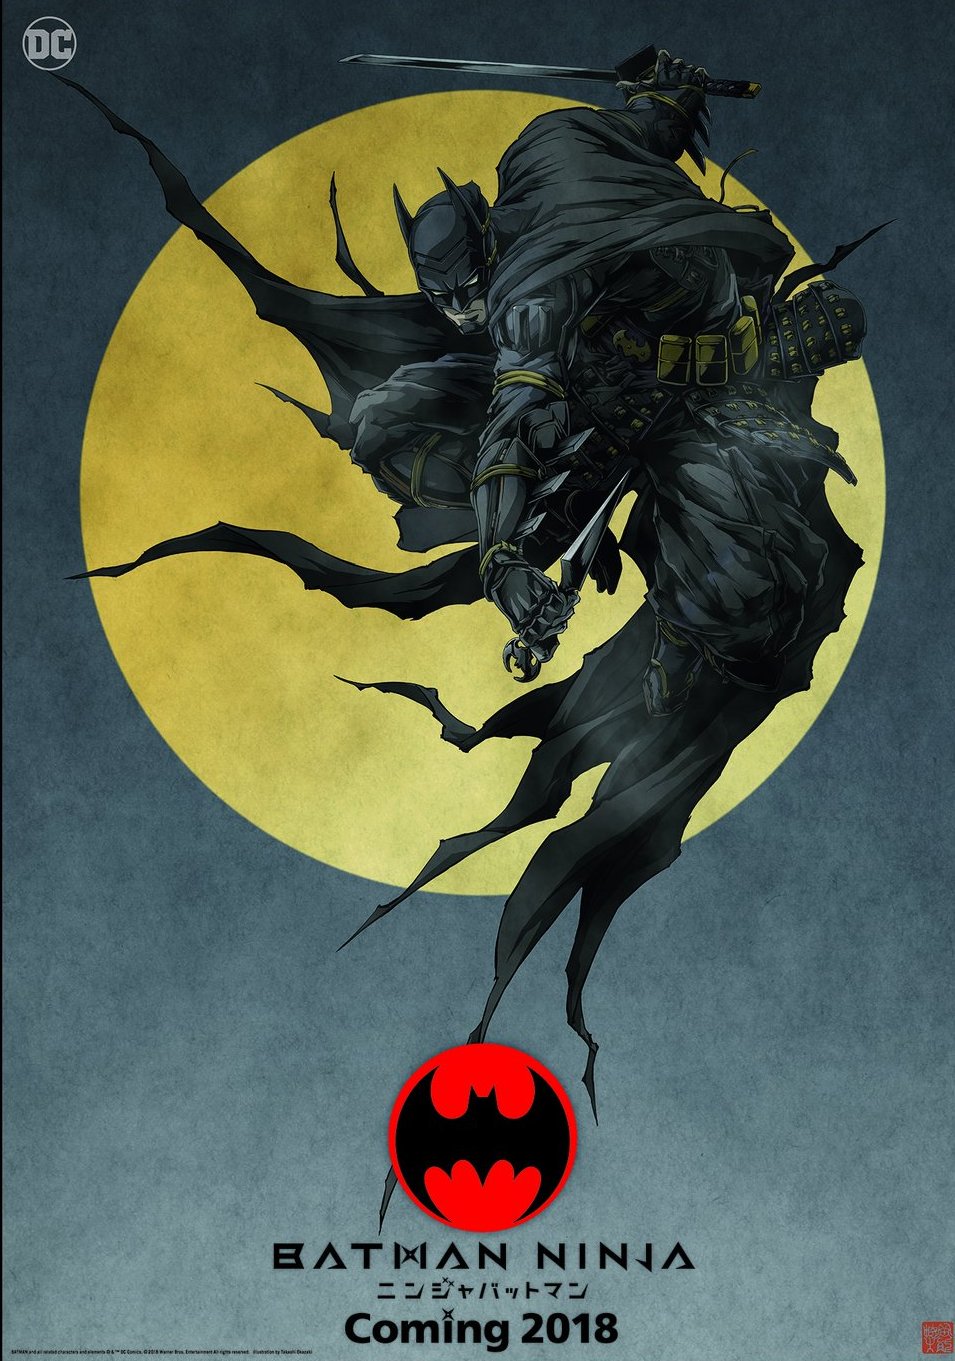 The Batman Ninja Anime Shows A Dark Knight We’ve Never Seen Before